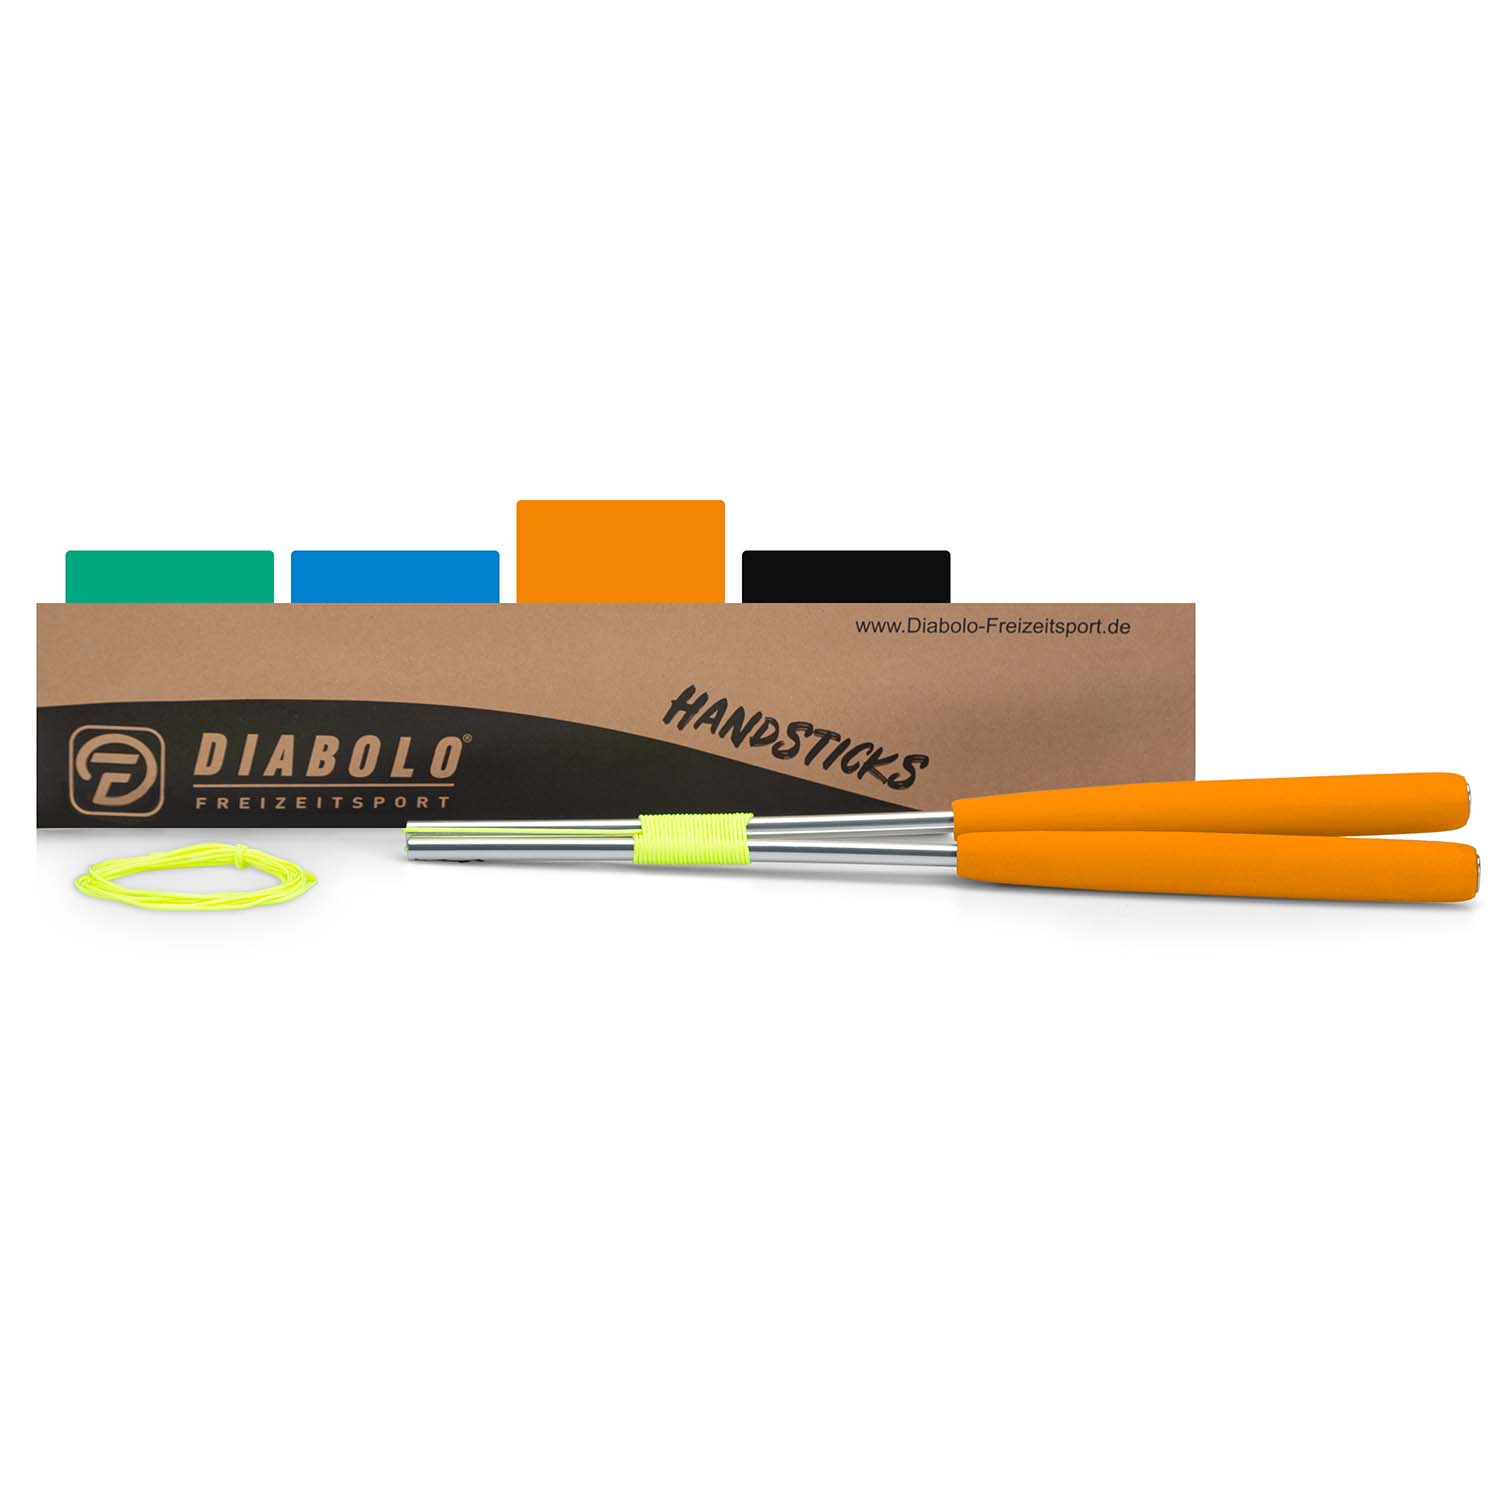 Diabolo Freizeitsport - Diabolo Handsticks Orange Farbauswahl